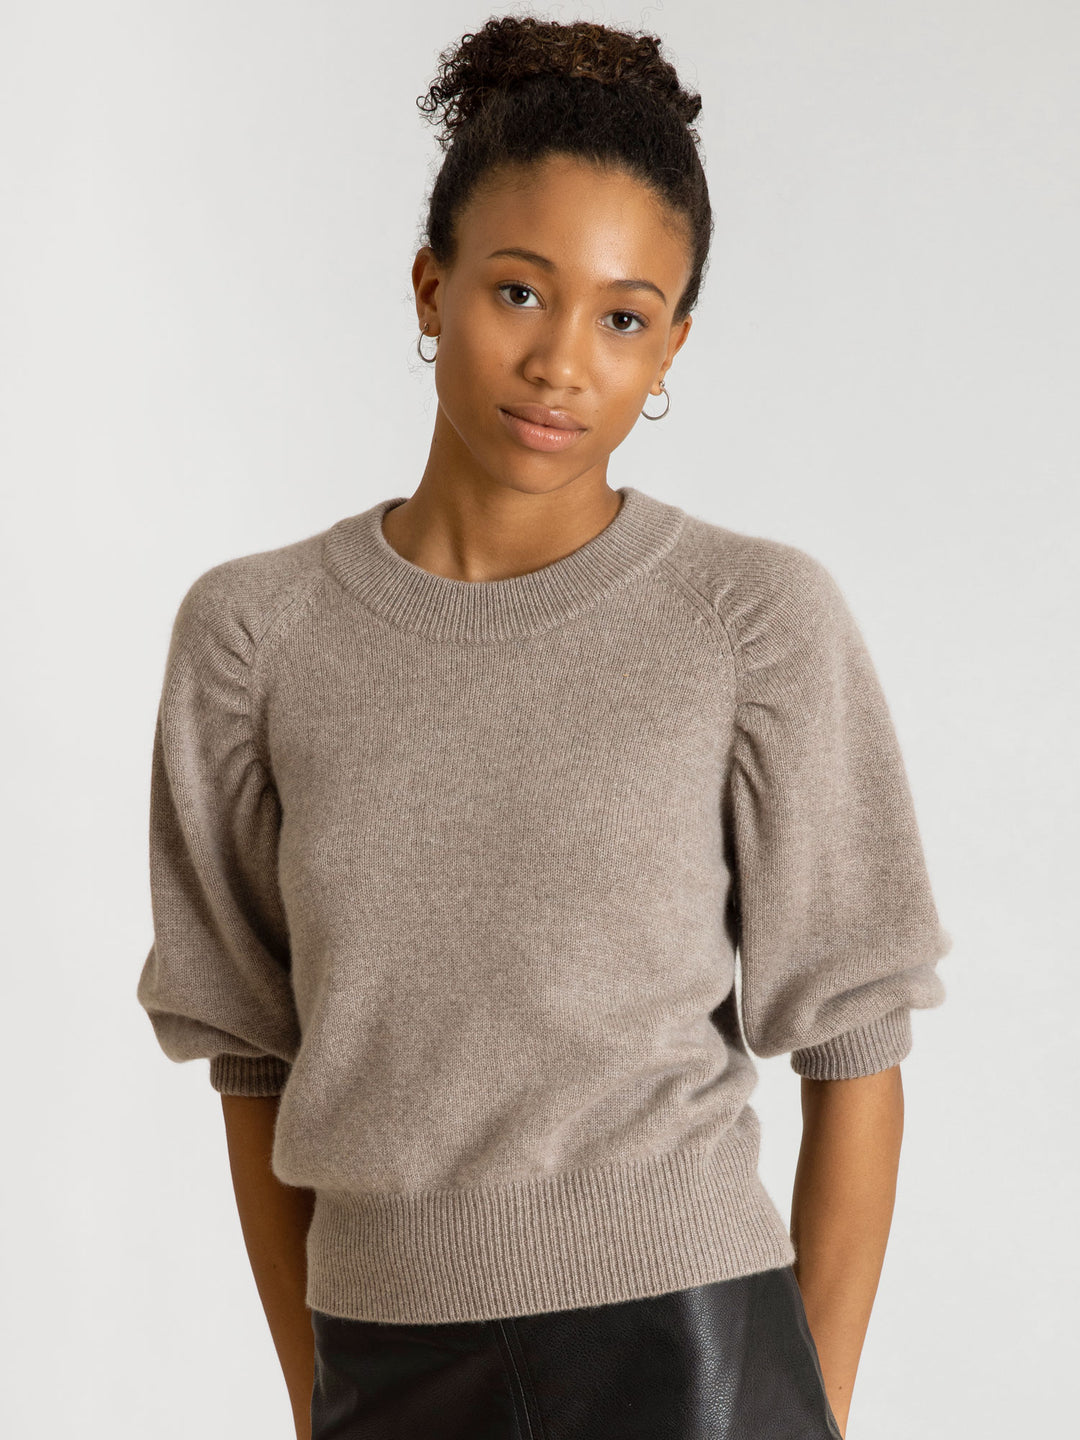 Cashmere sweater aurora, 100% cashmere from Kashmina. Scandinavian design, color toast/brown